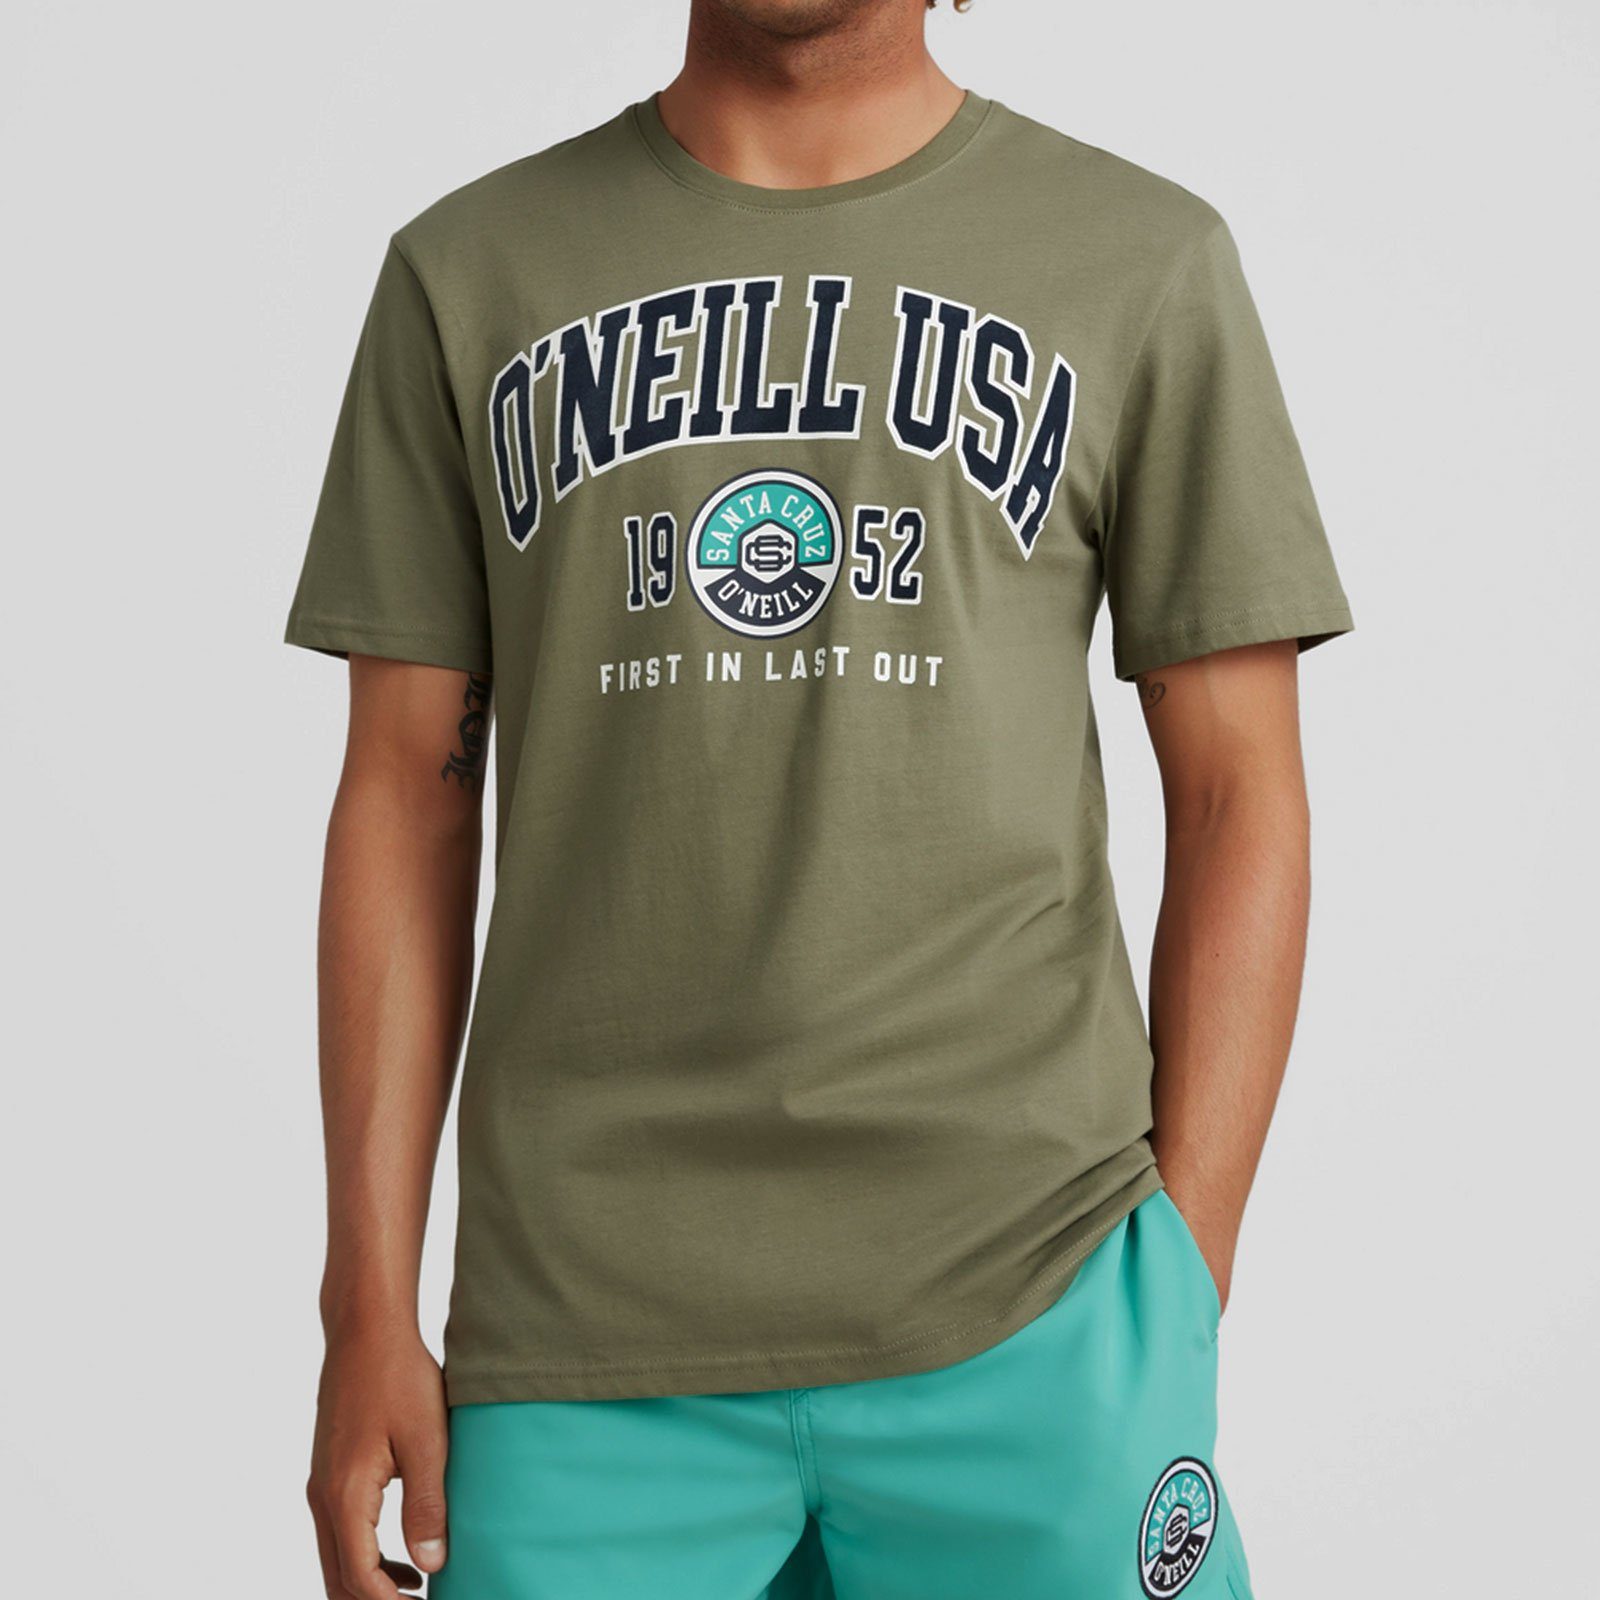 Surf Flock-Print 16011 green State mit lichen O'Neill großem deep T-Shirt